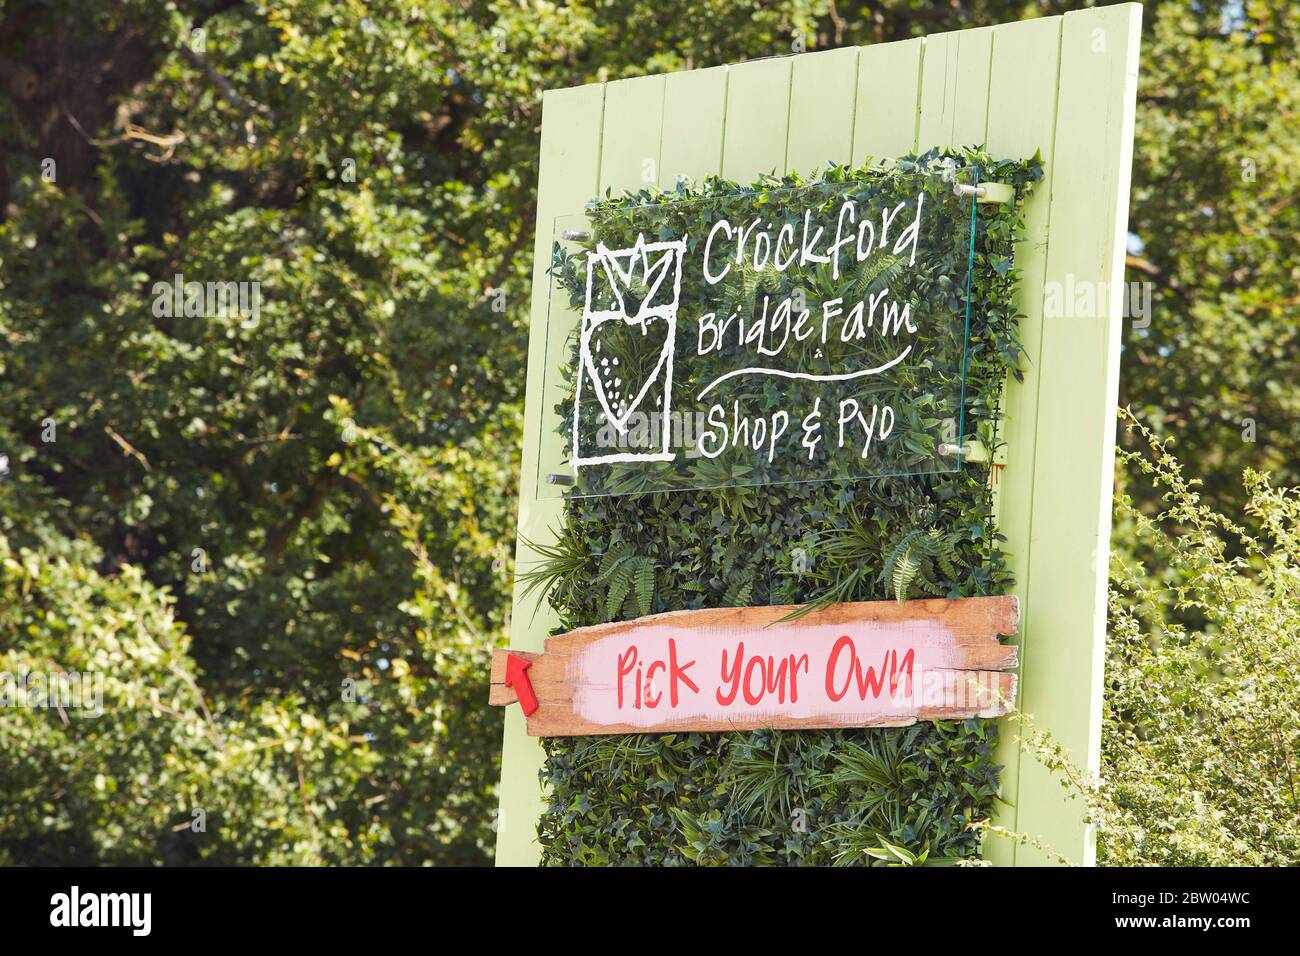 Crockford Bridge Farm Shop and Pick Your Own site, Ottershaw, Surrey, England Stock Photo